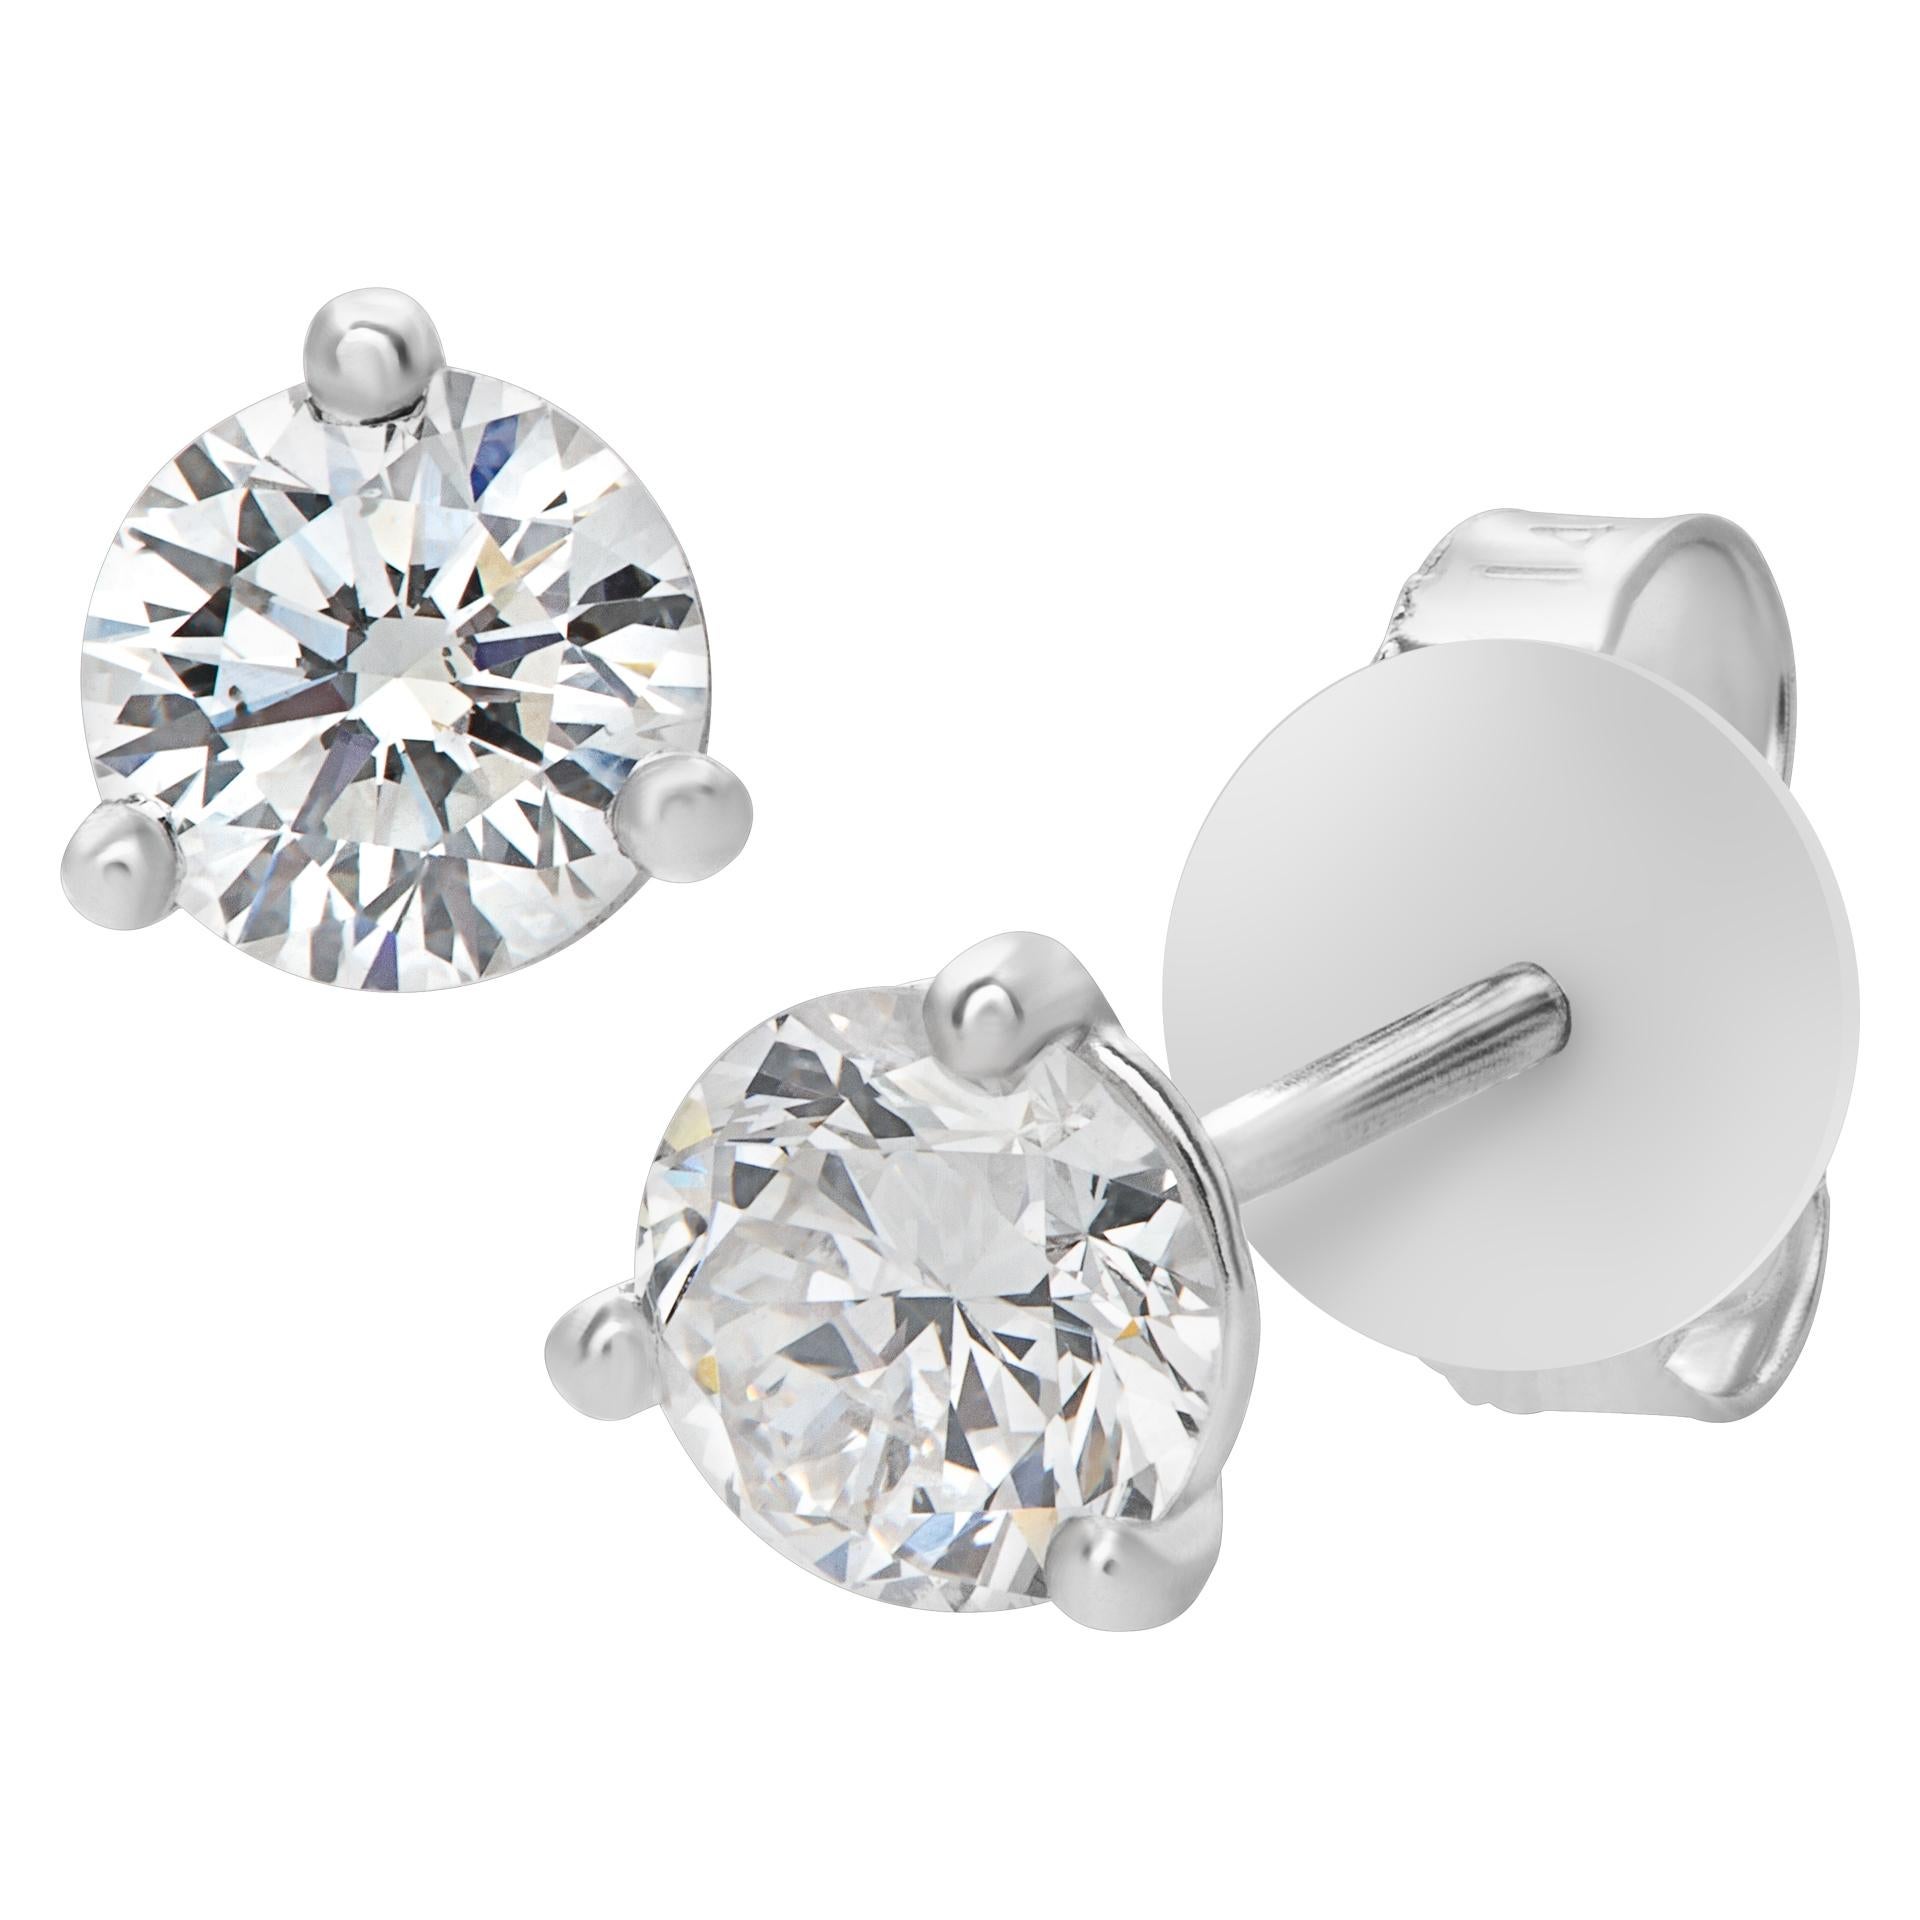 GIA certified round brilliant cut diamond stud earrings set in 18k white gold 